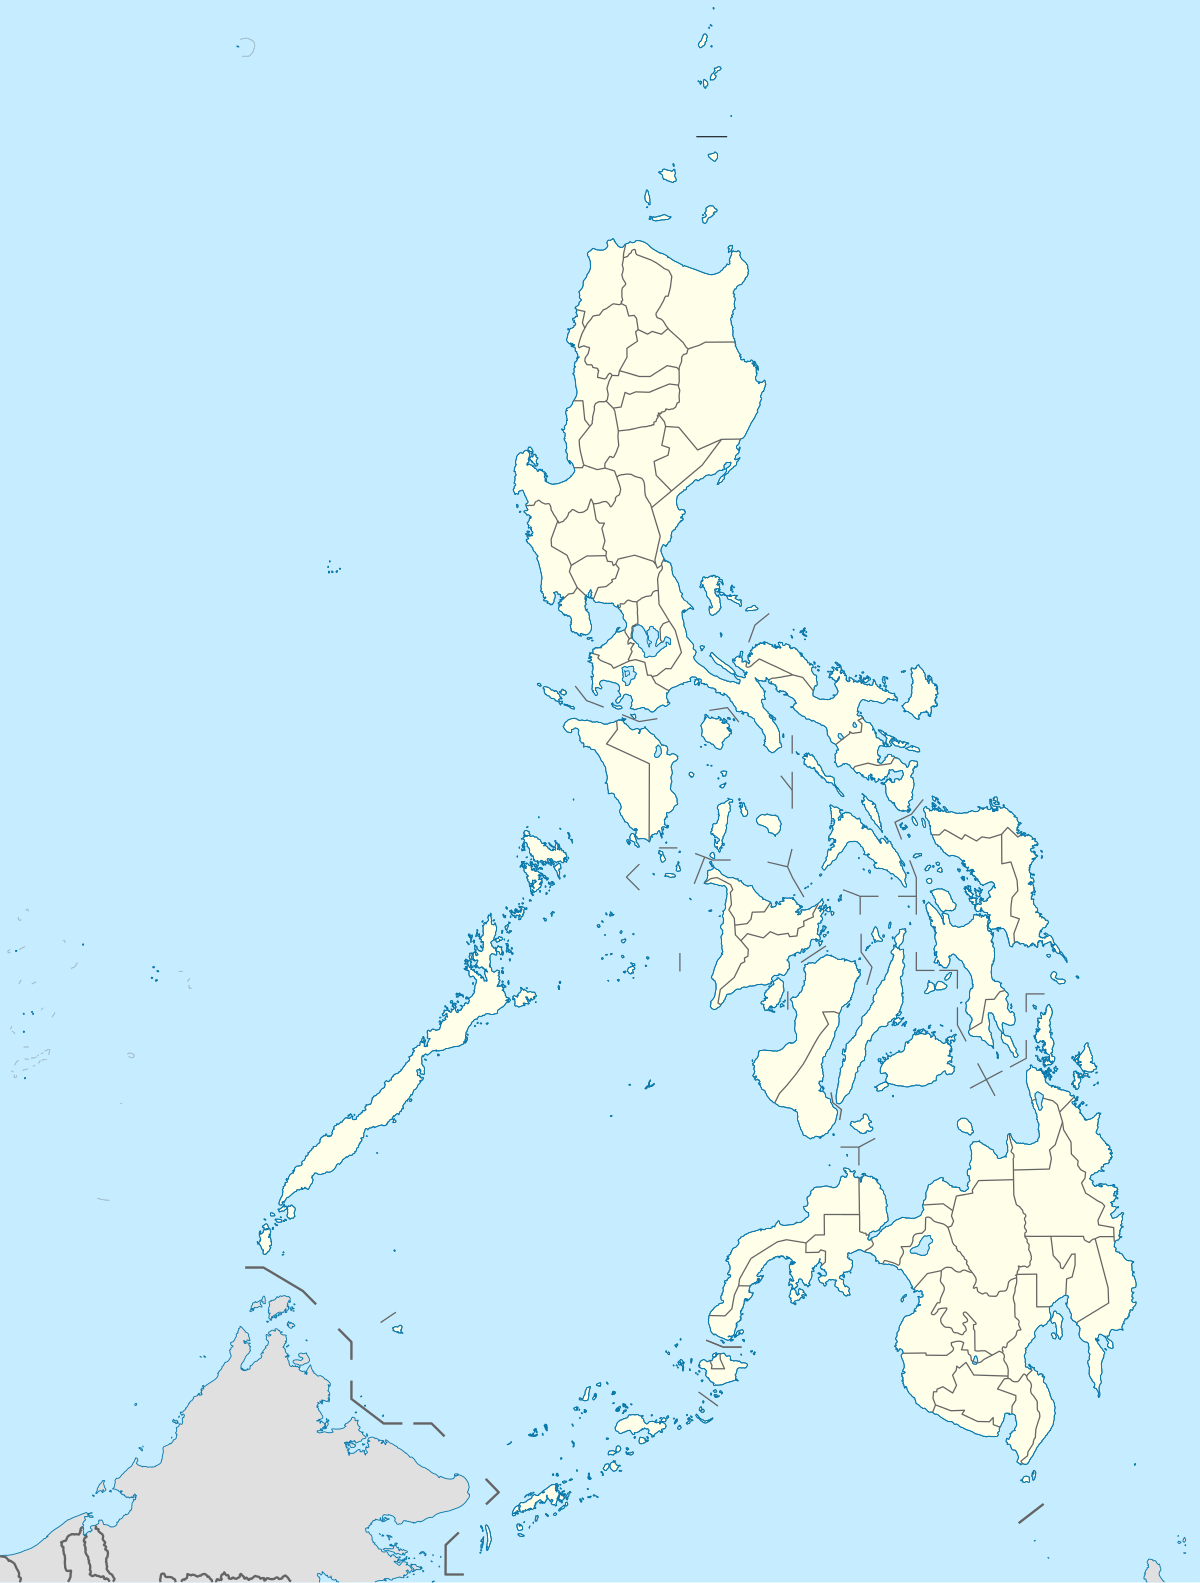 Philippines location map.svg